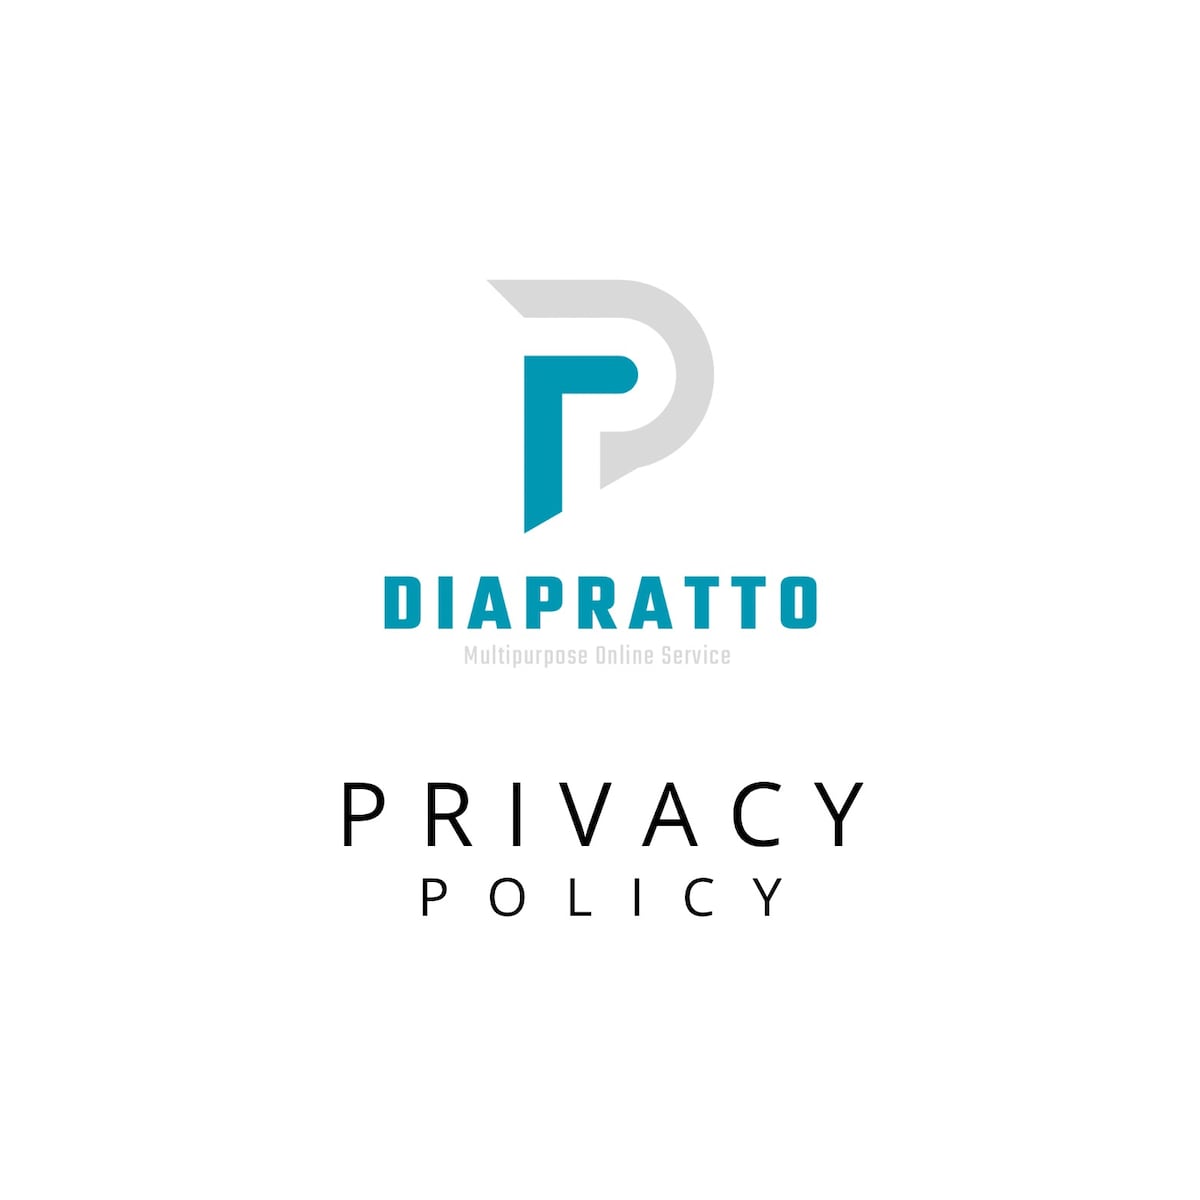 Diapratto 公式ロゴ（プライバシーポリシー）